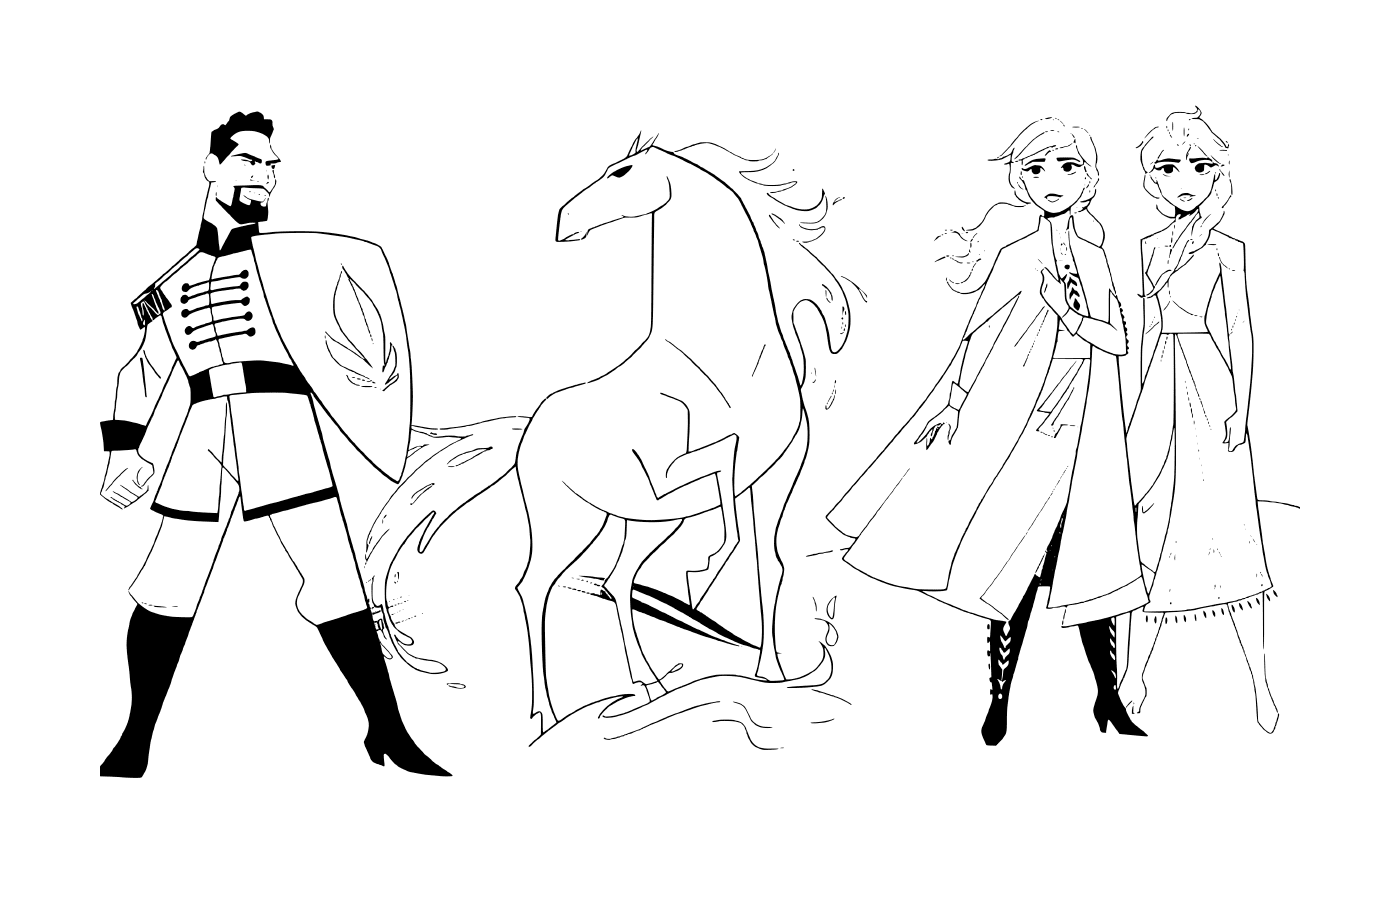  Anna and Elsa with the Nokk horse against Lieutenant Mattias of The Snow Queen 2 